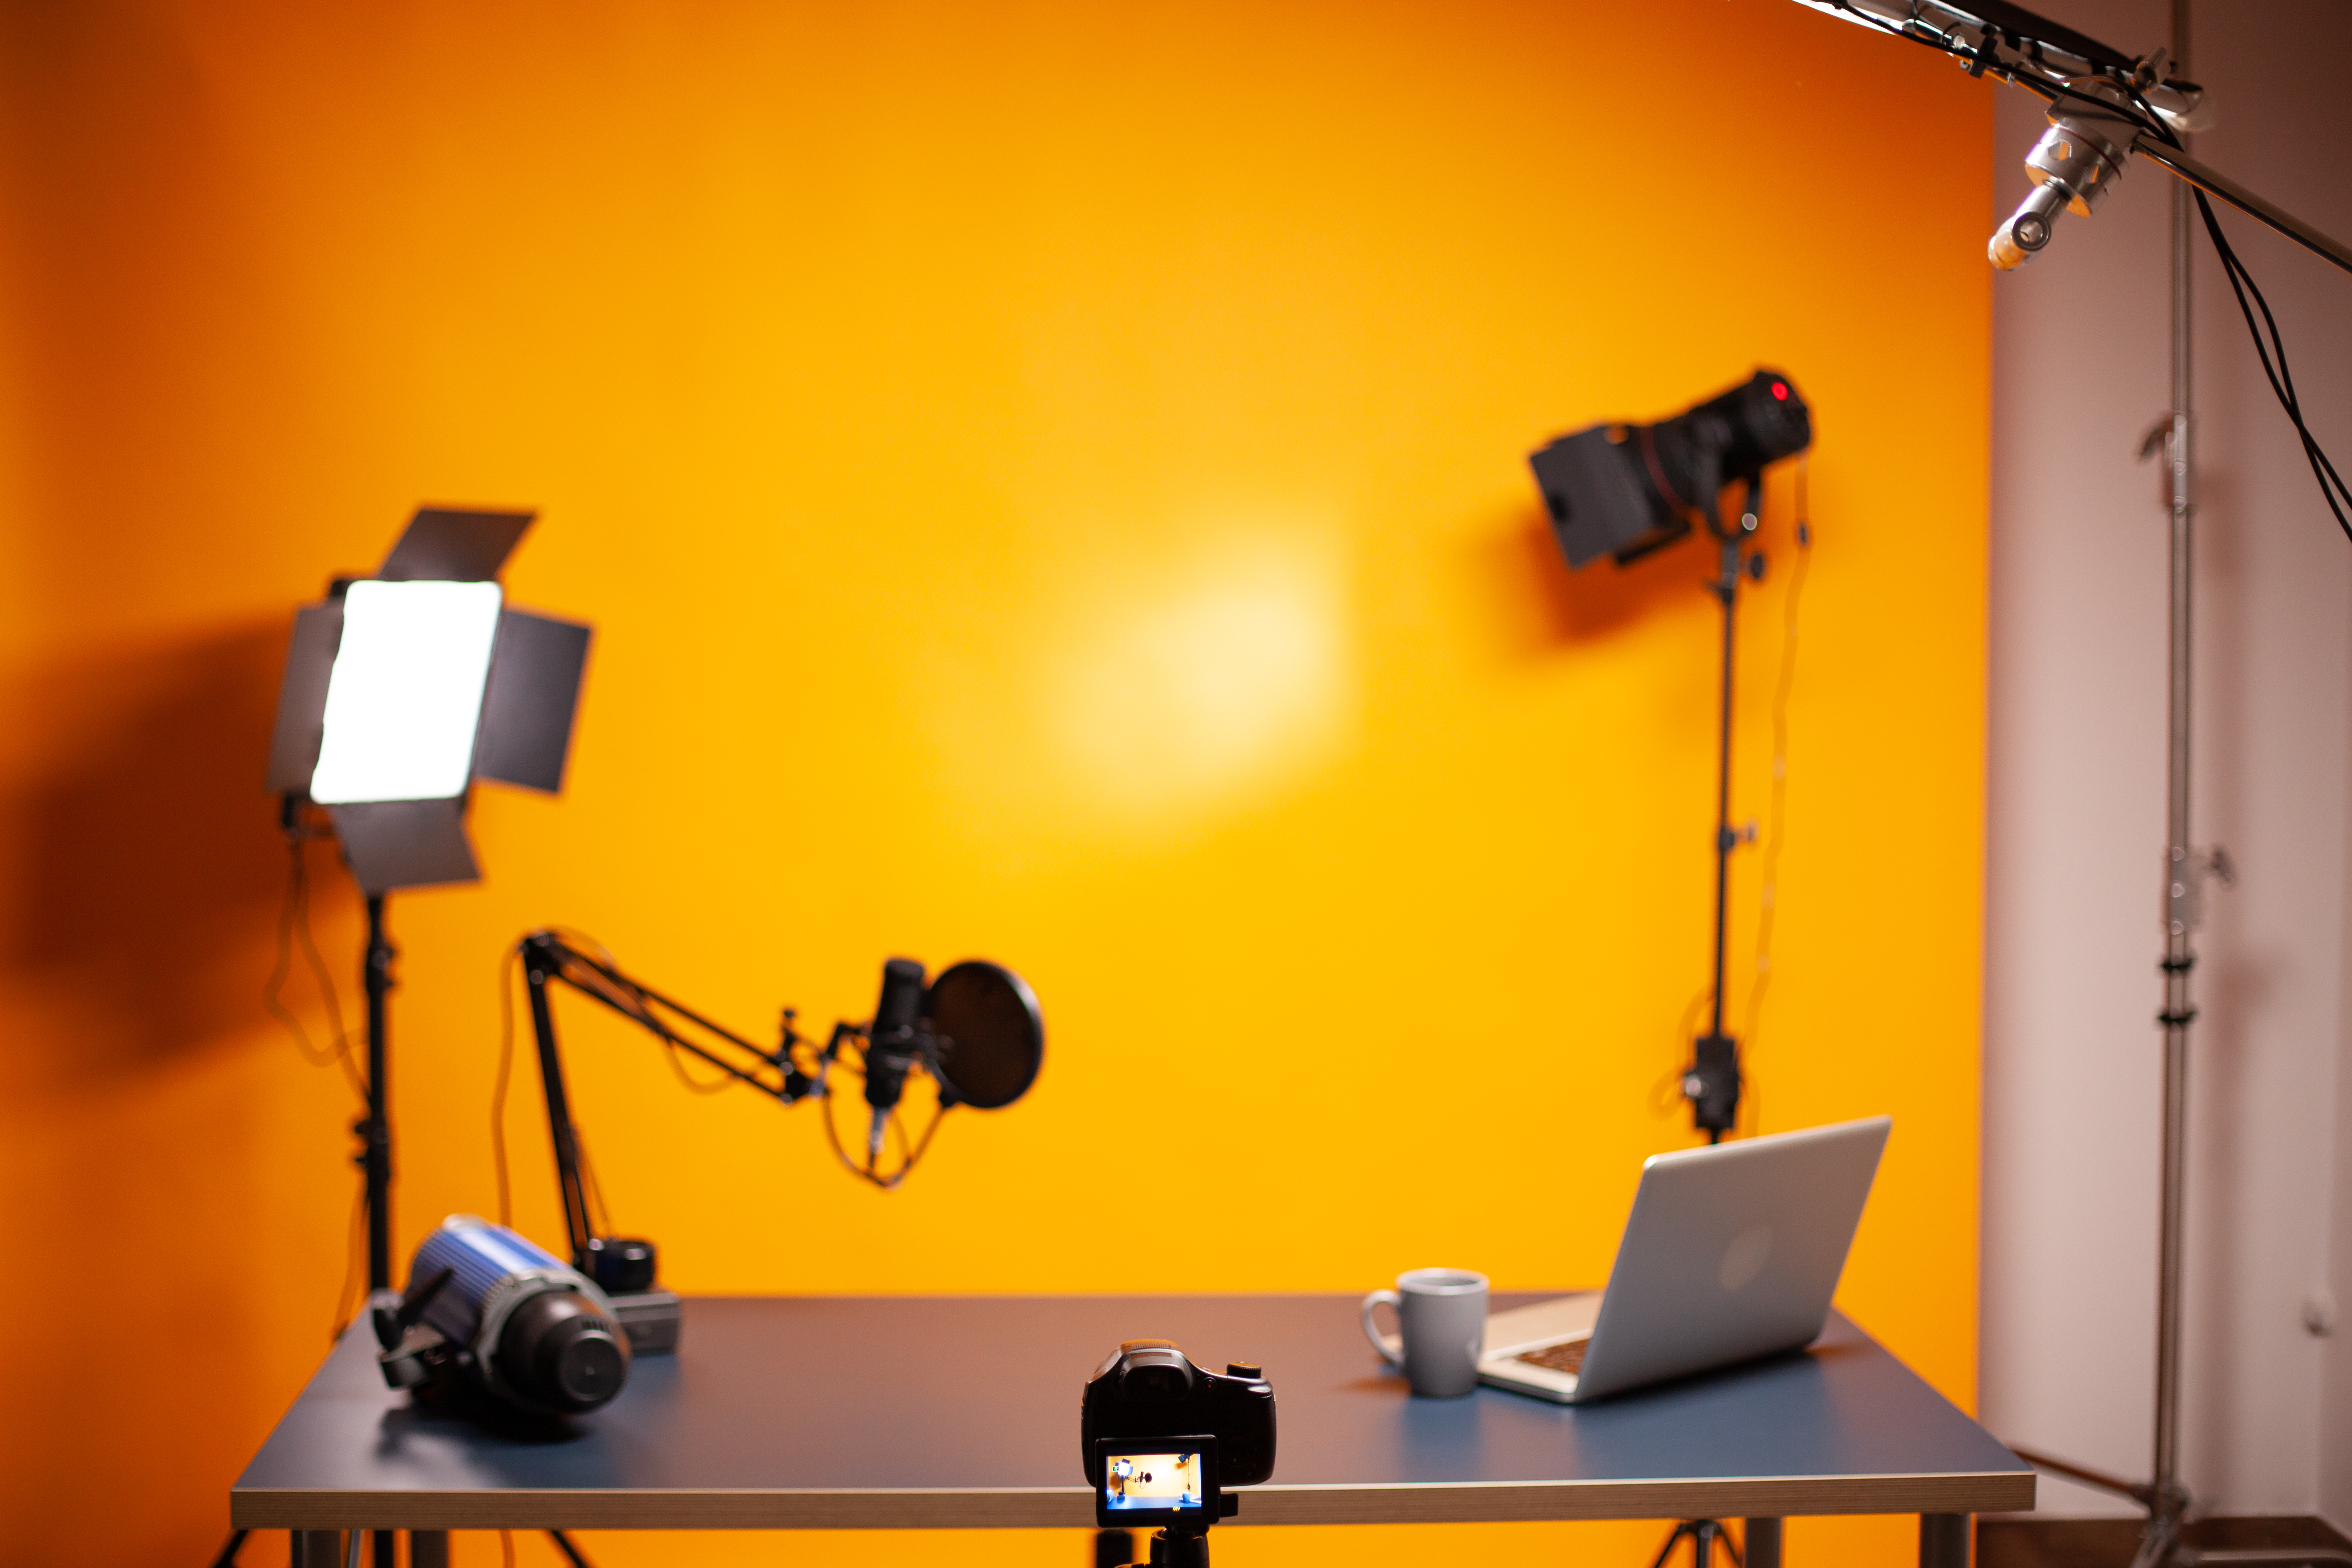 professional-podcast-vlogging-setup-studio-with-yellow-wall.jpg